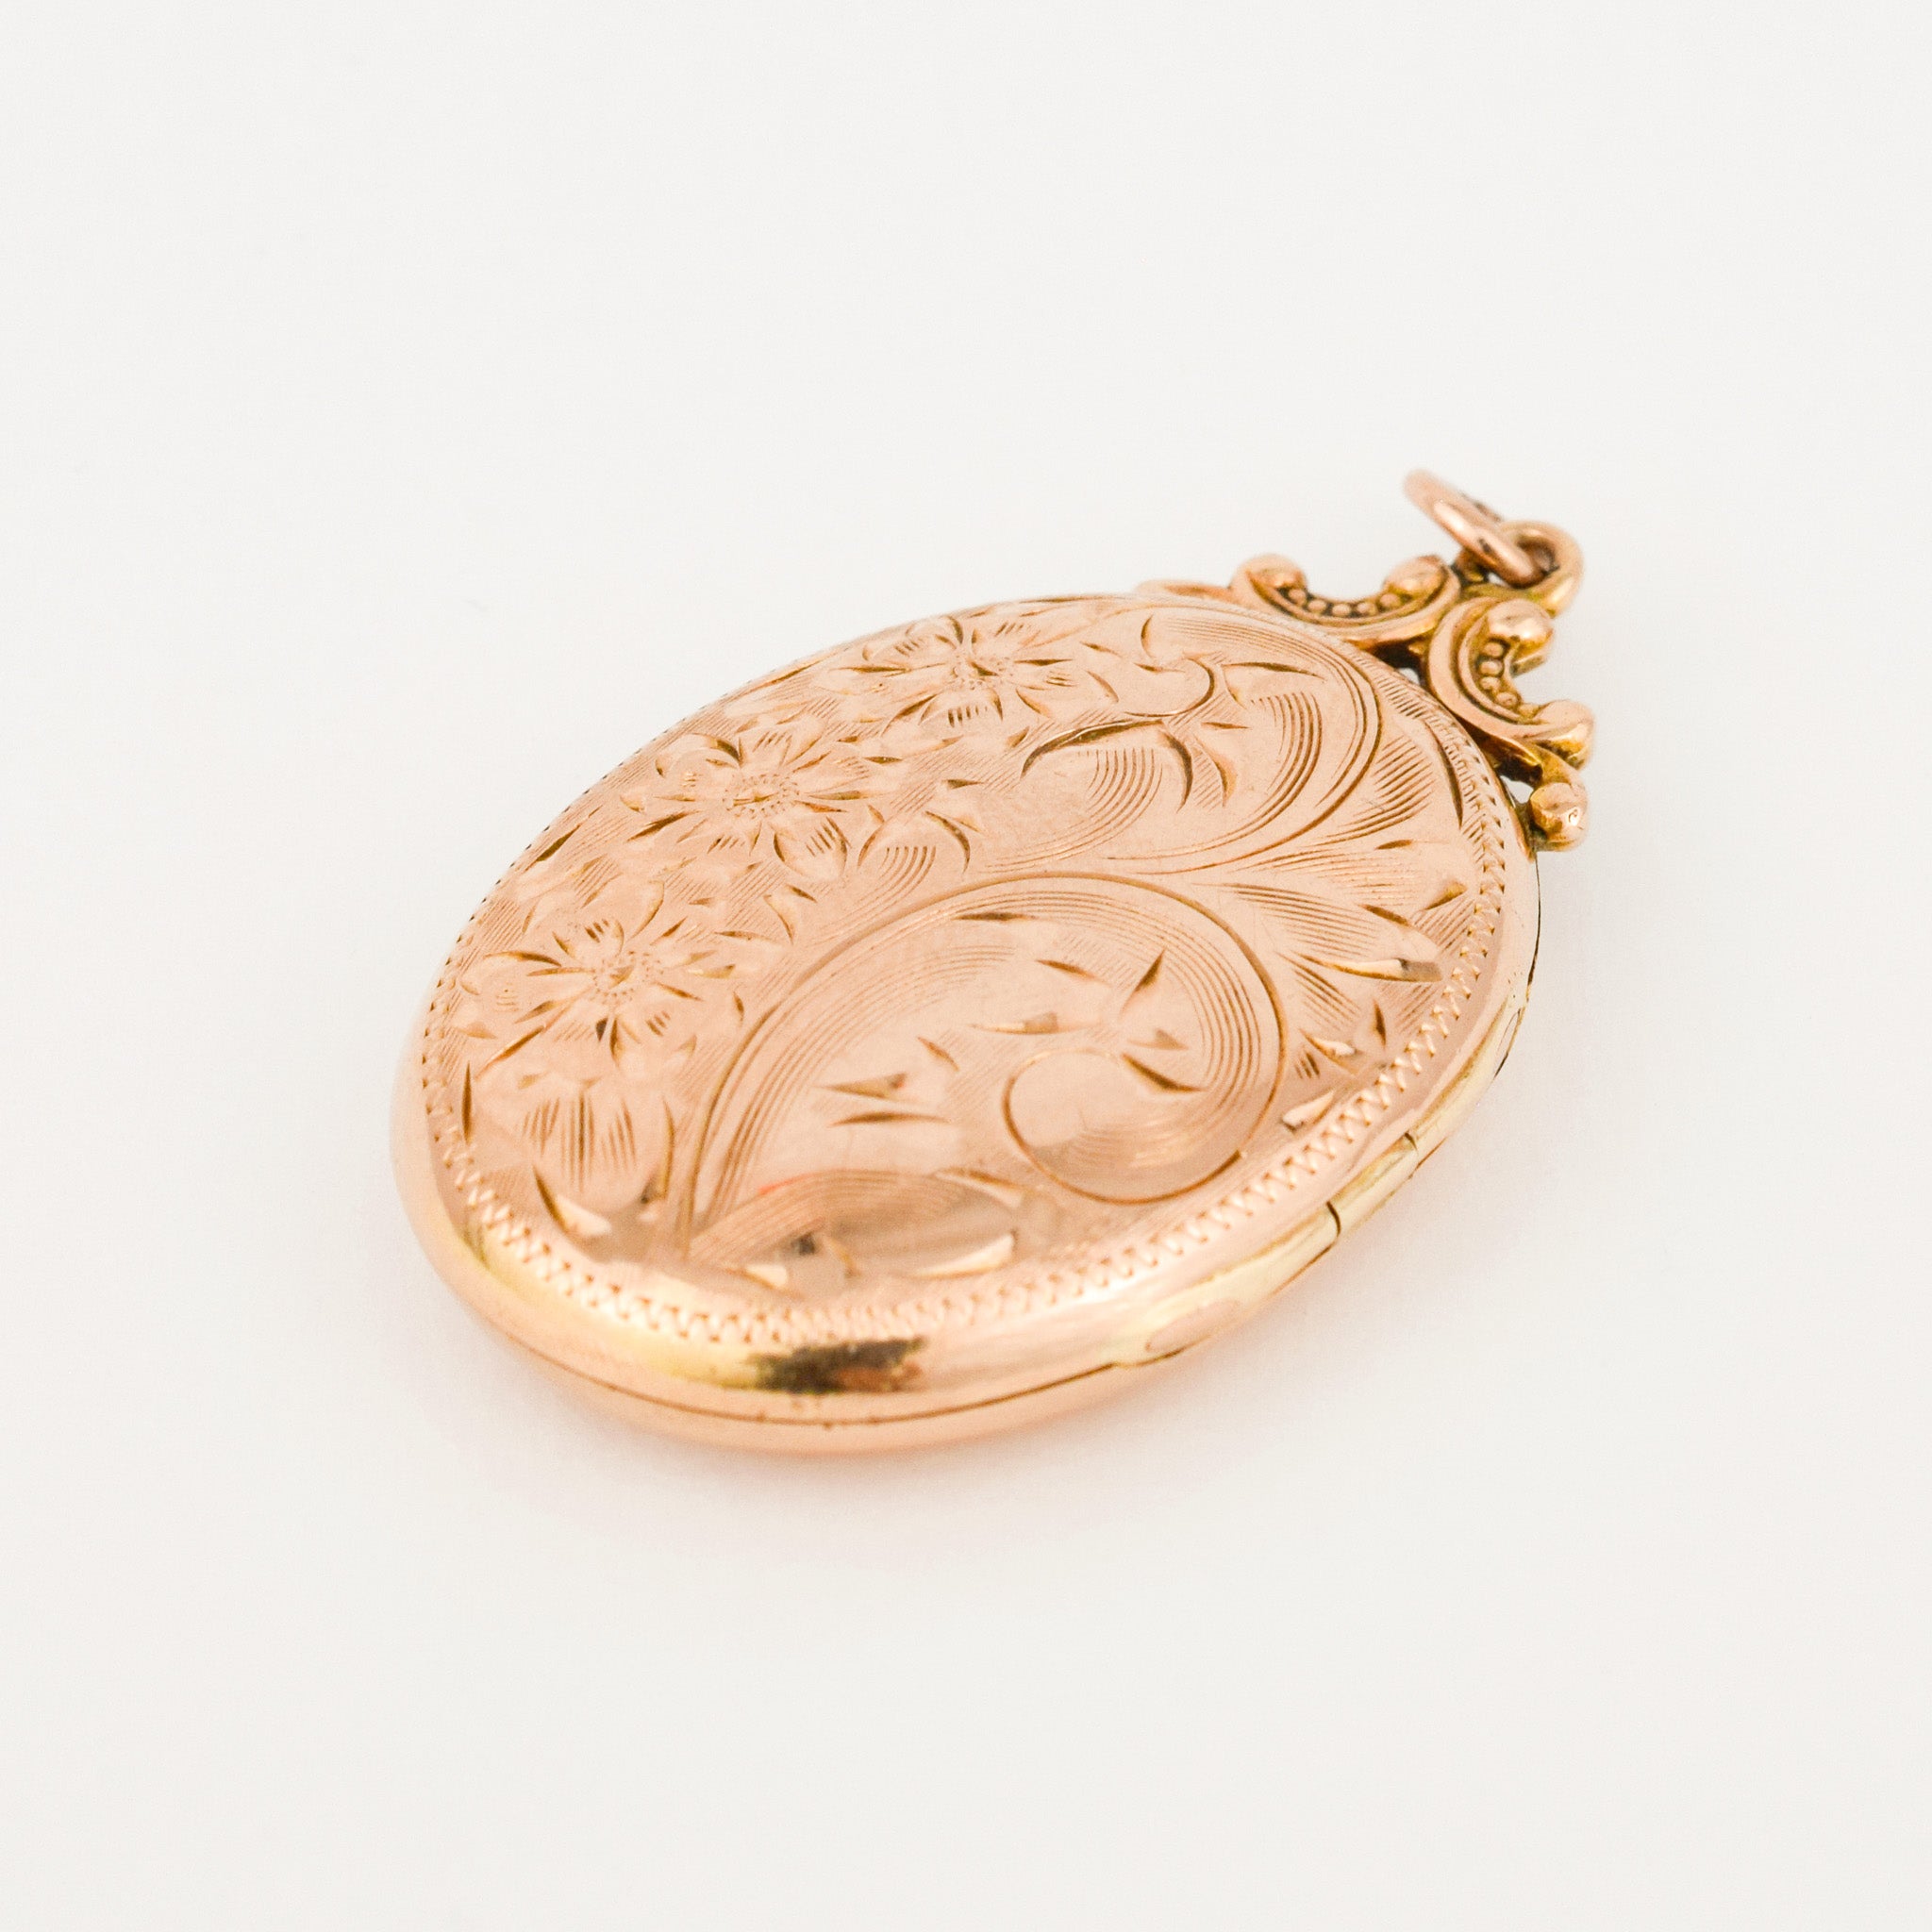 Ornate Oval Gold Locket